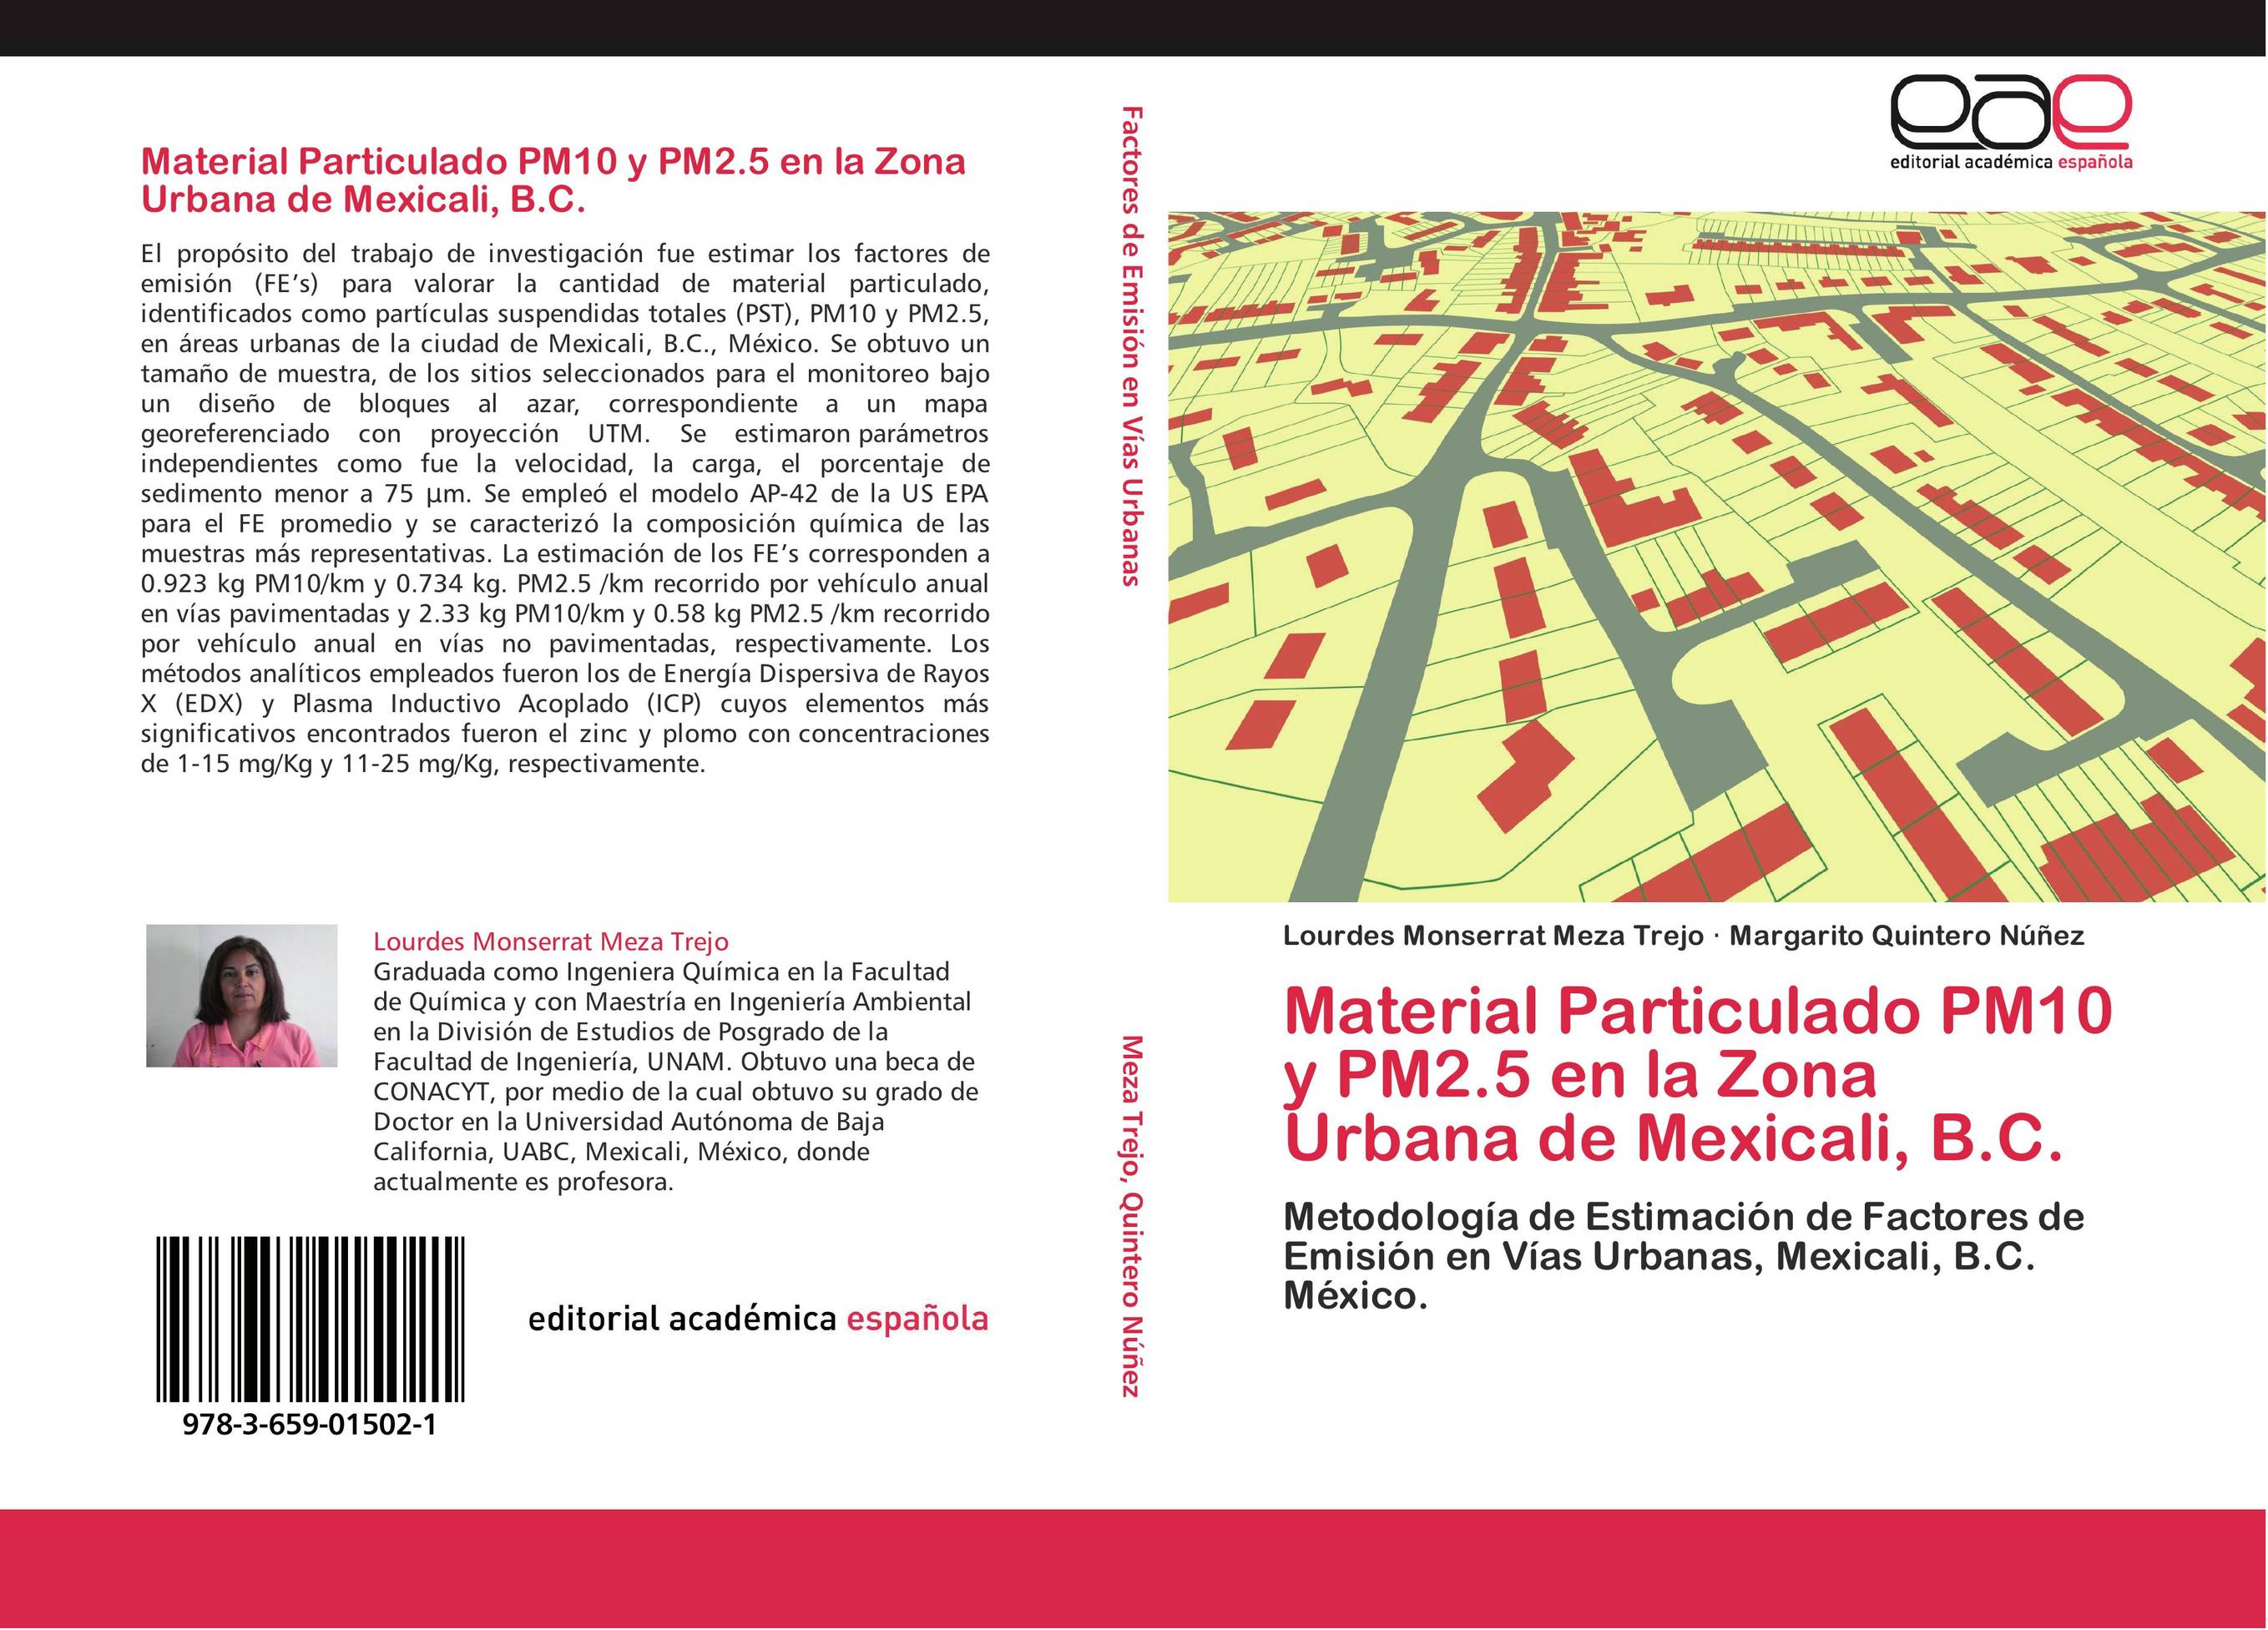 Material Particulado PM10 y PM2.5 en la Zona Urbana de Mexicali, B.C.